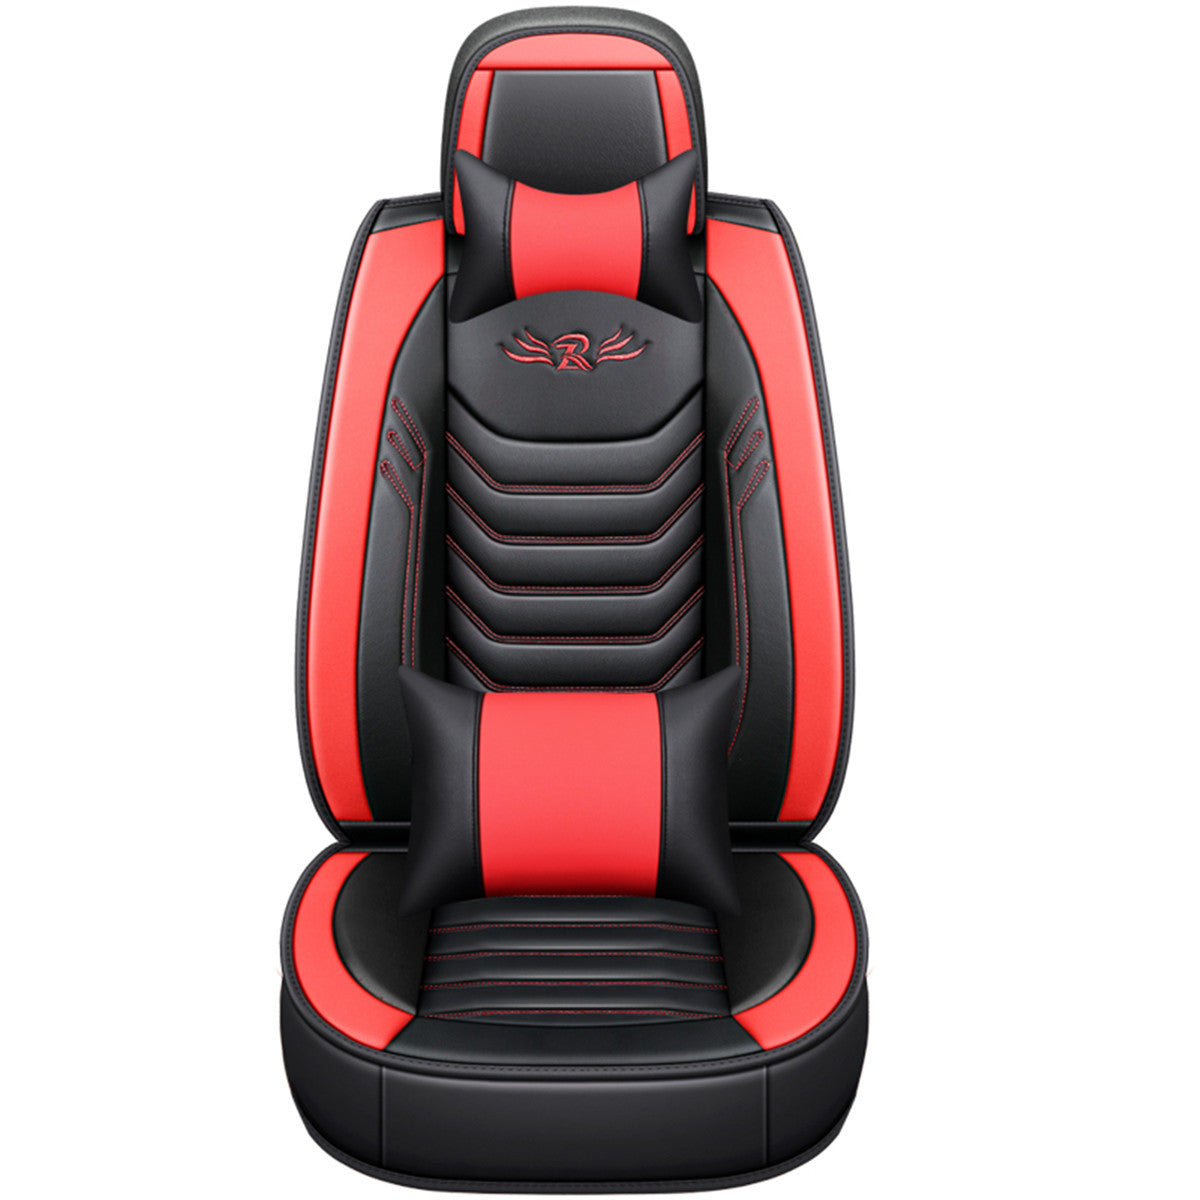 Wear-Resistant PU Leather Car Seat Cover 65 * 55 * 25cm - Auto GoShop